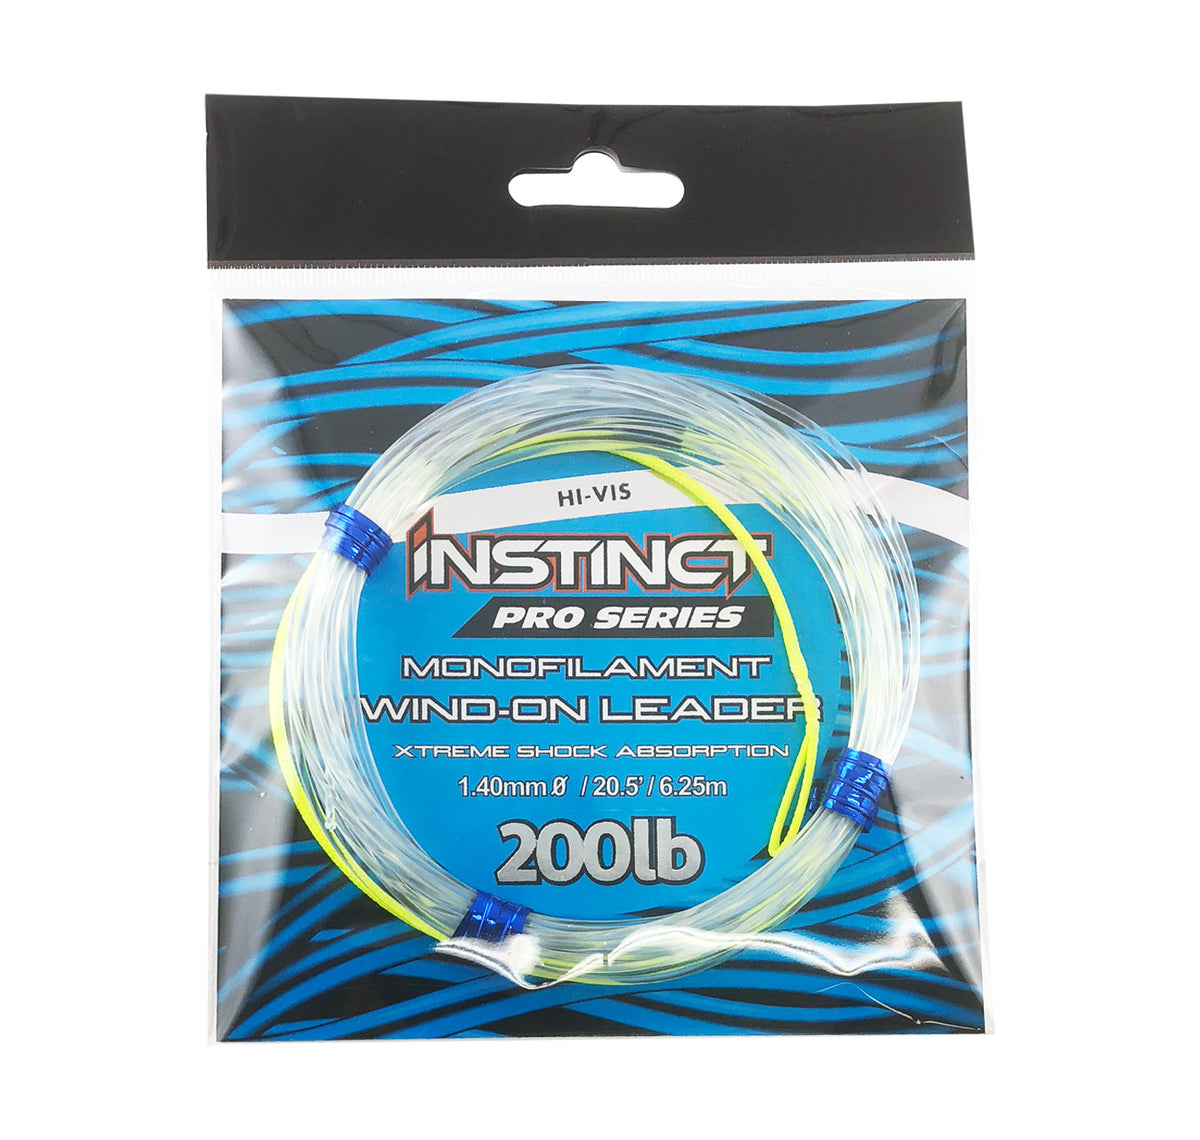 Instinct Pro Series Monofilament Wind-On Leader